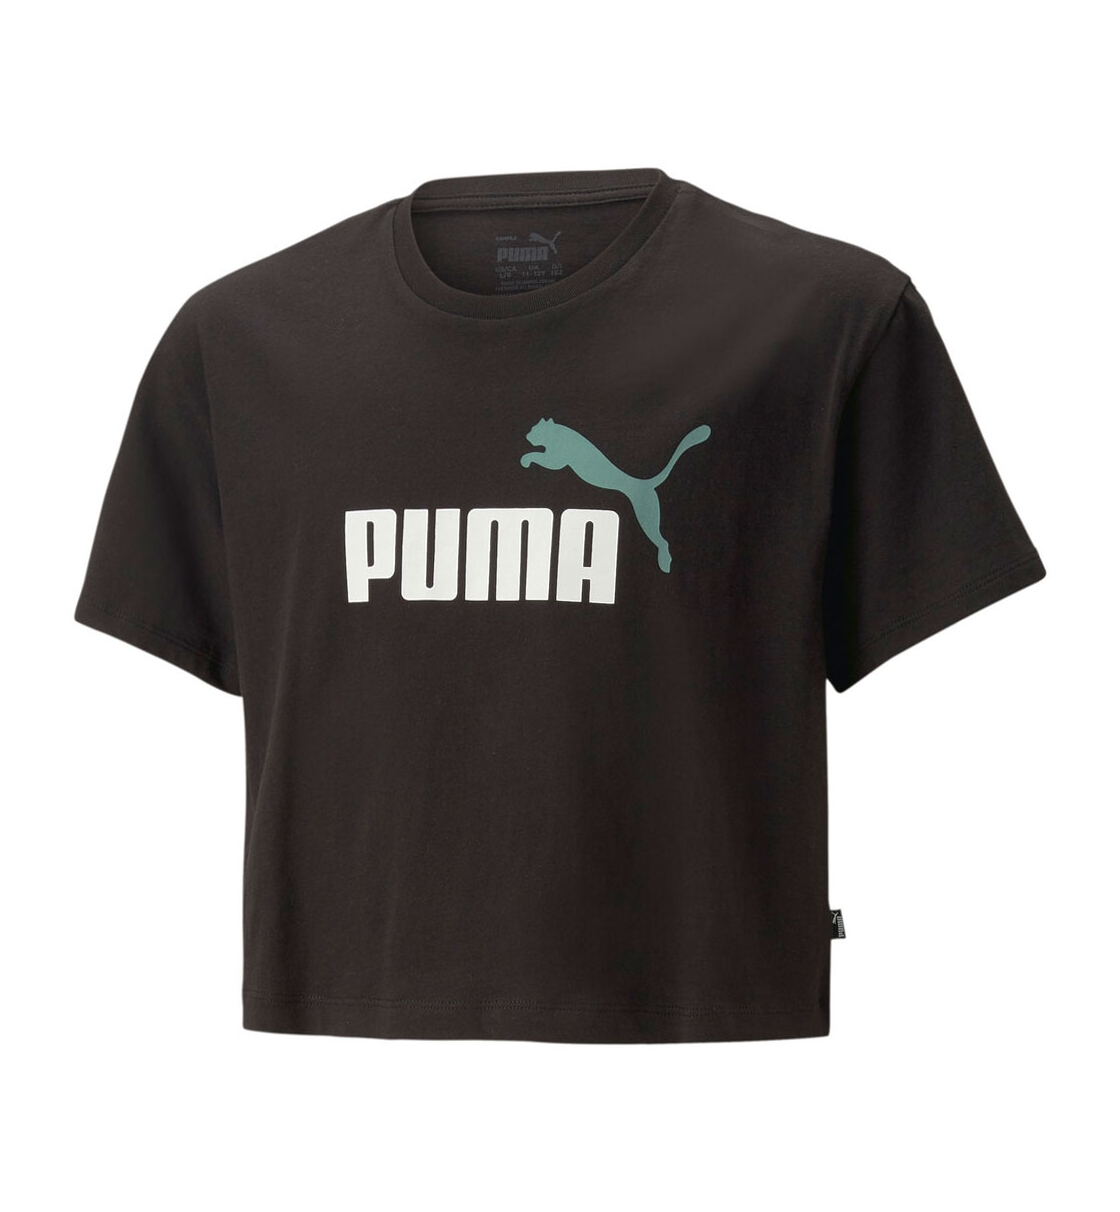 Puma Ss22 Girls Logo Cropped Tee 845346